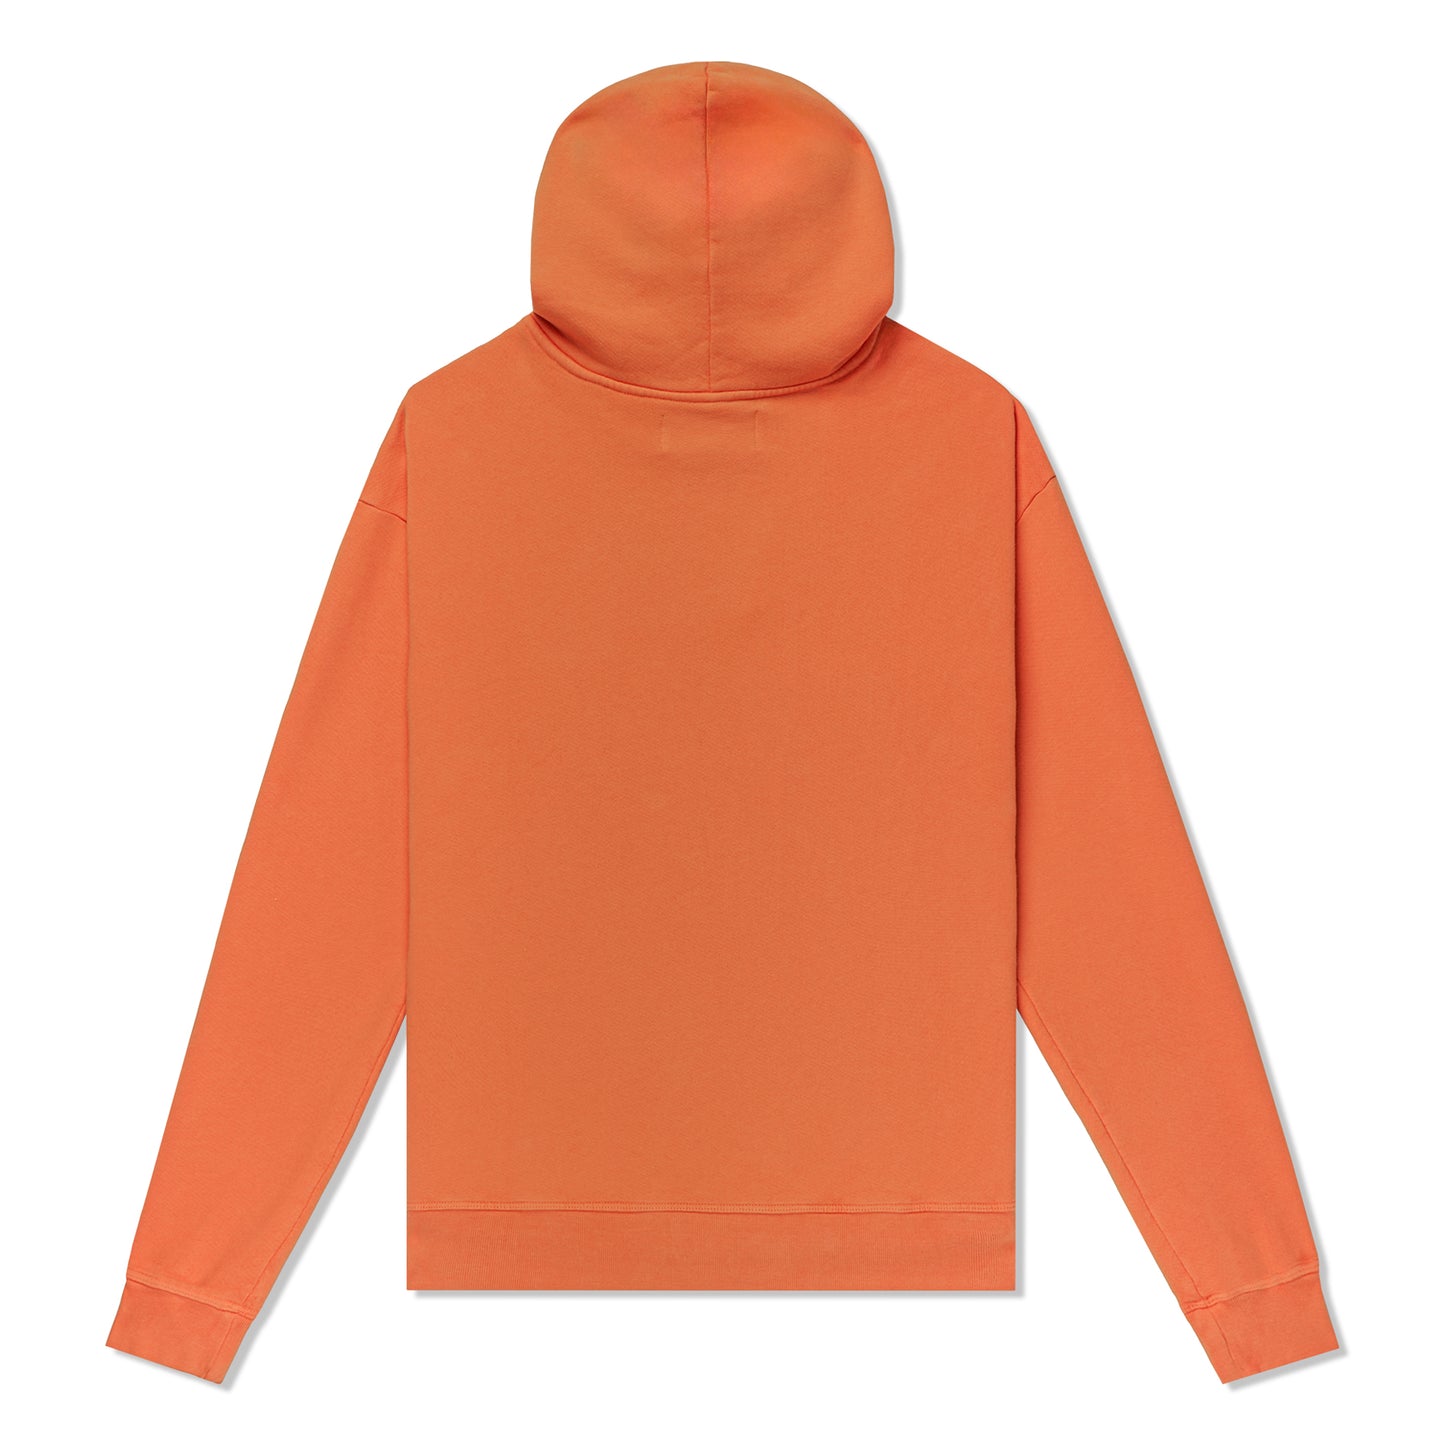 Concepts Intl Sport Hoodie (Orange)